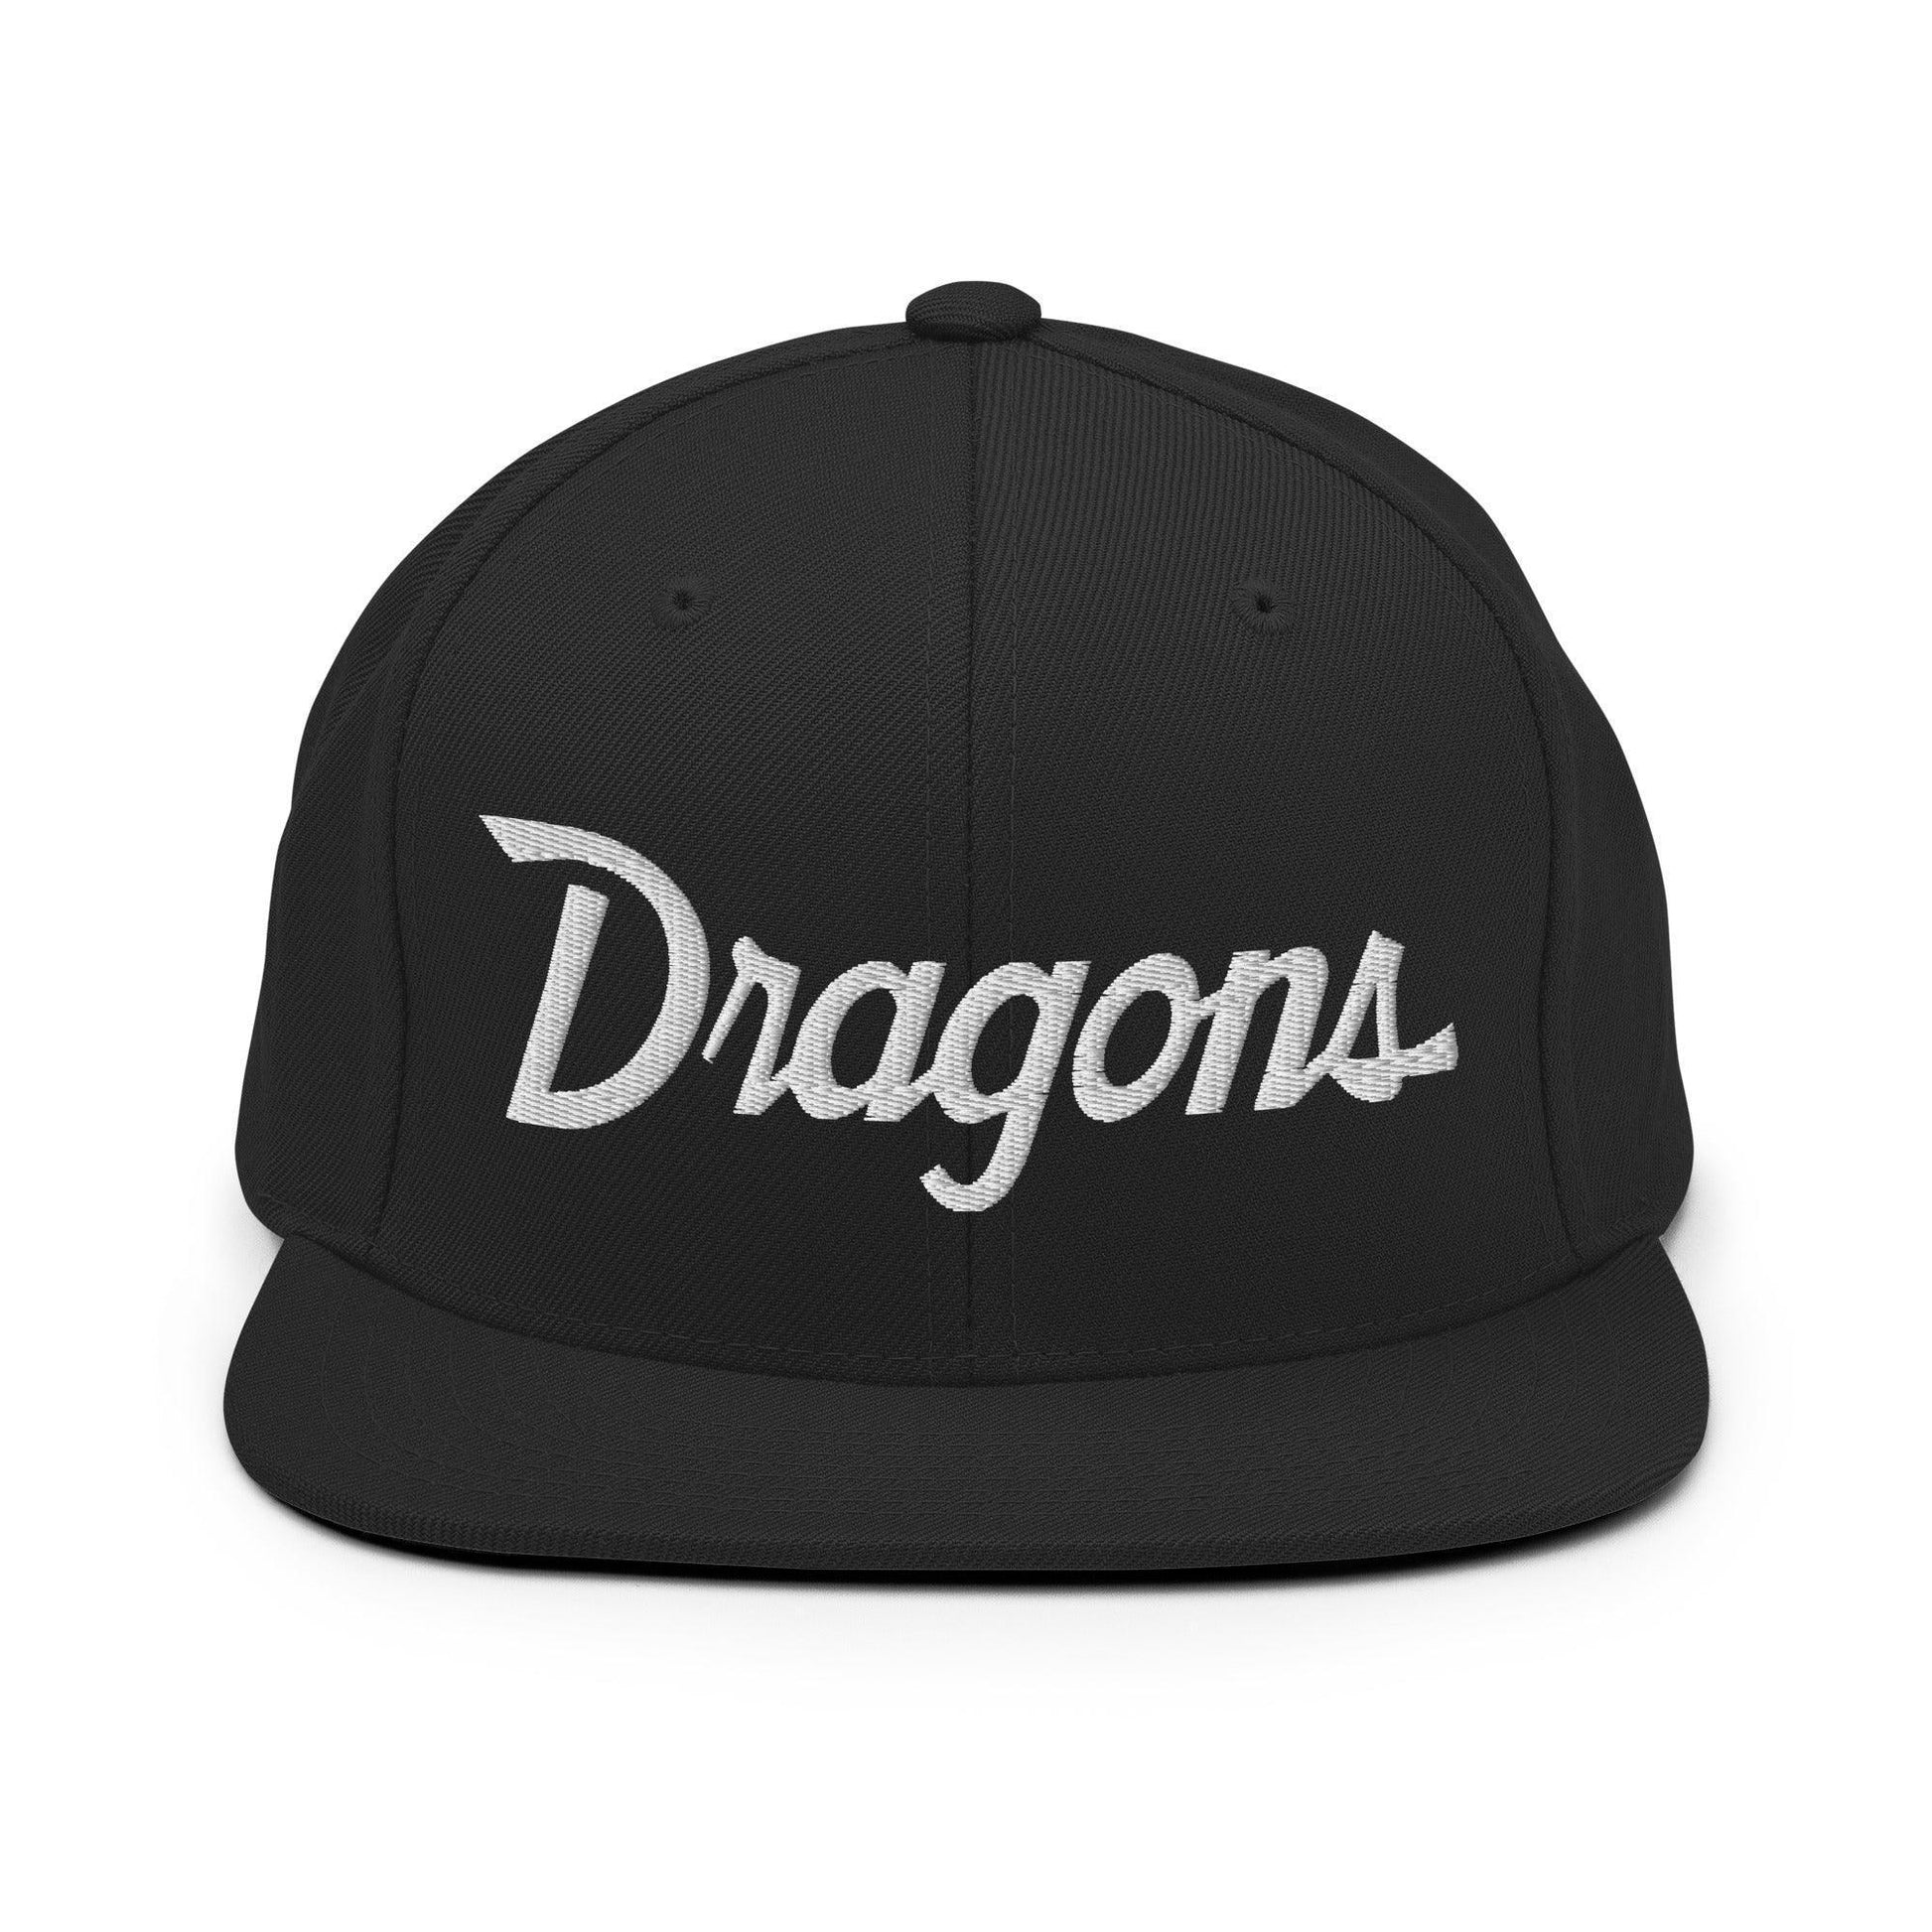 Dragons School Mascot Snapback Hat Black